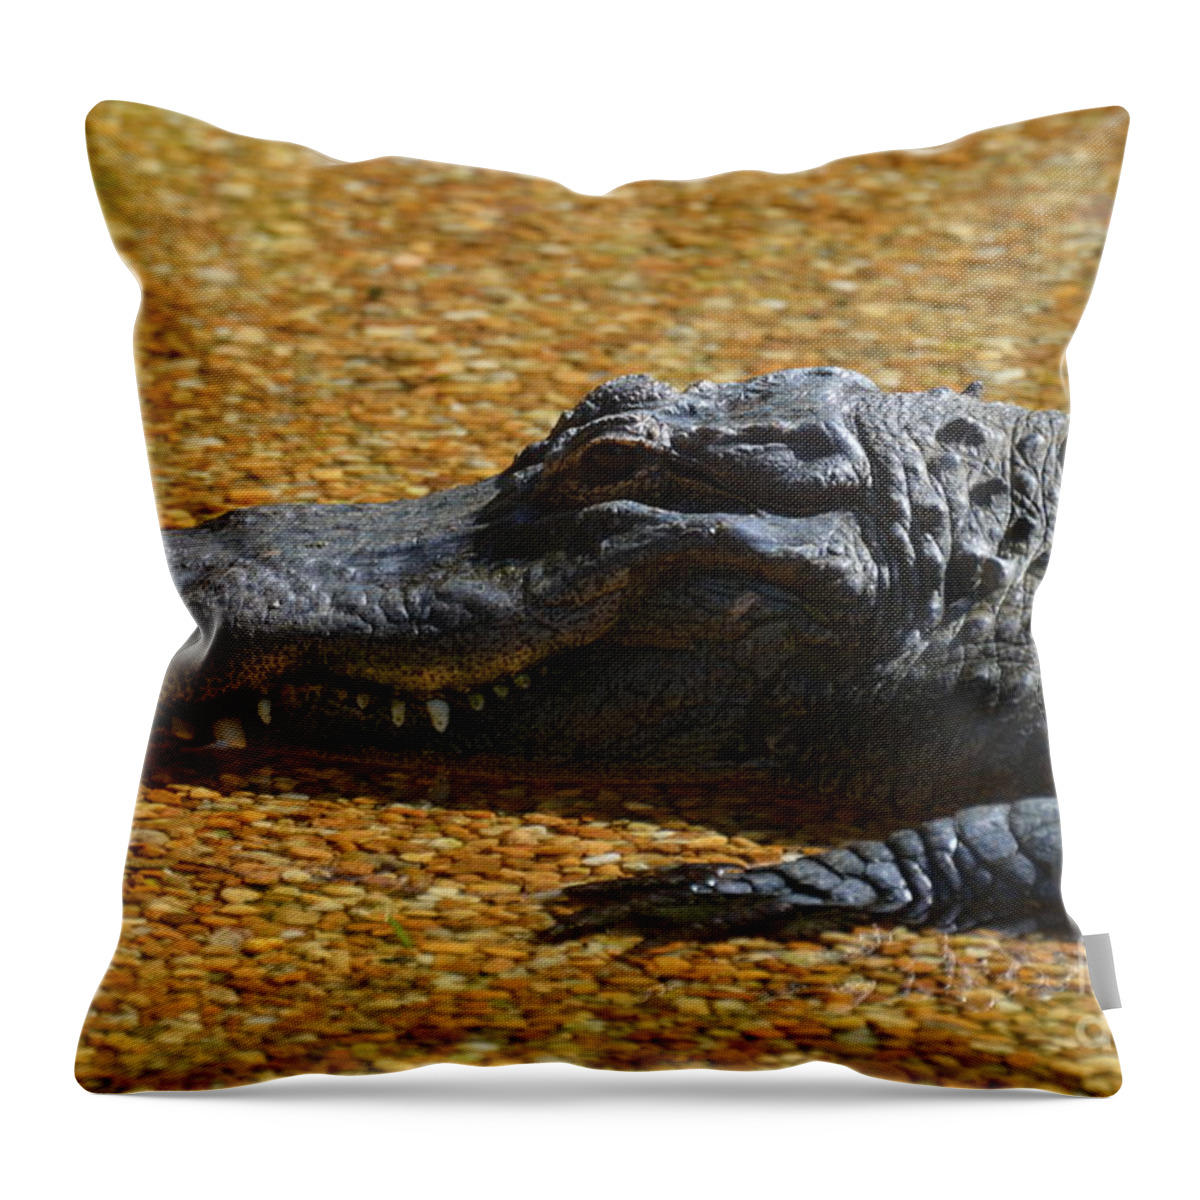 Alligator Throw Pillow featuring the photograph Alligator by DejaVu Designs